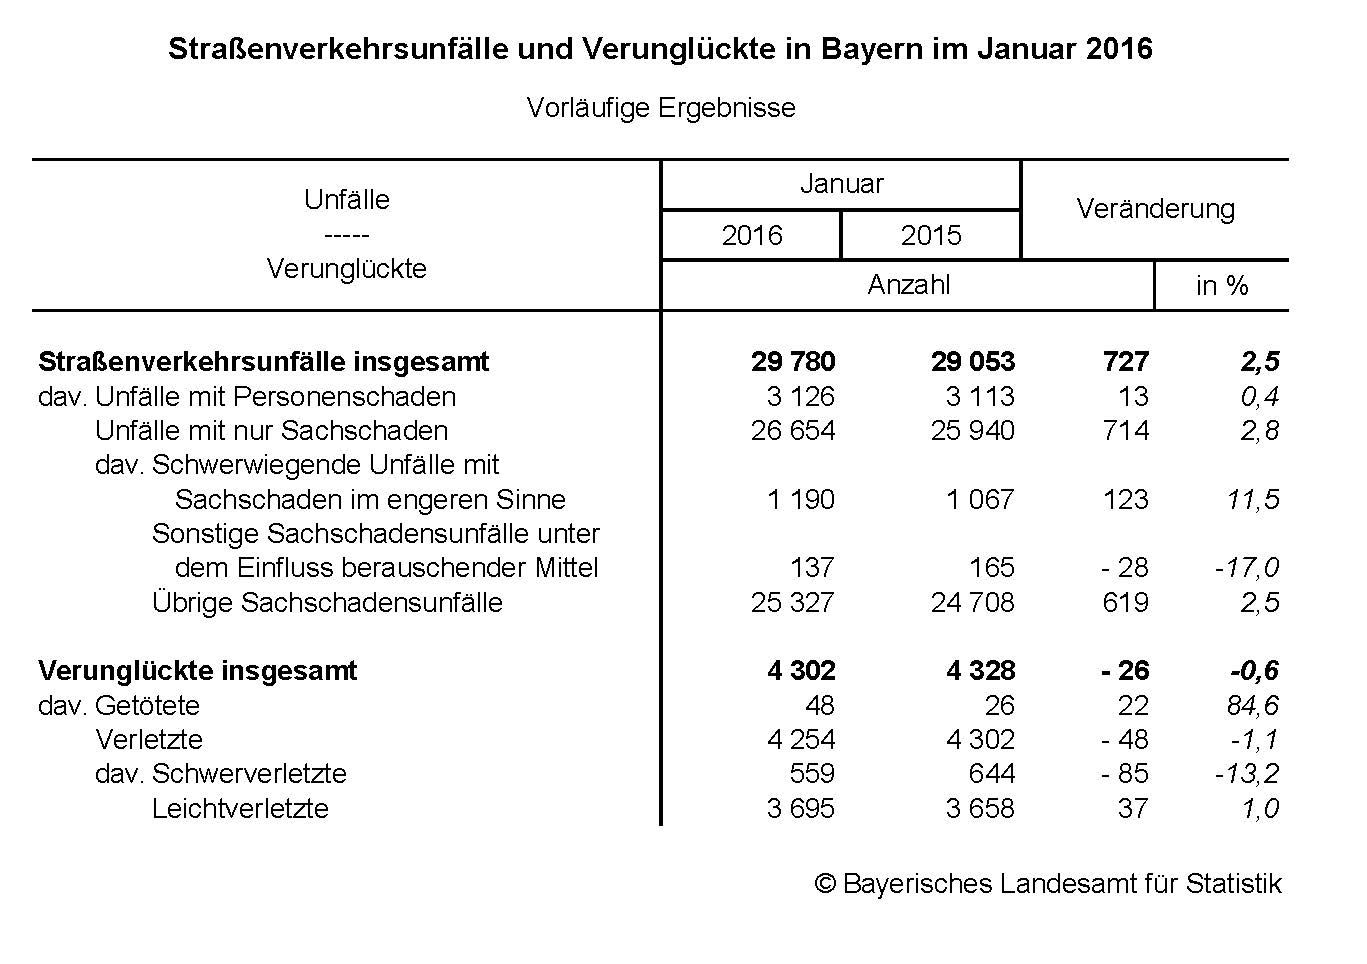 Straßenverkehrsunfälle und Verunglückte in Bayern im Januar 2016